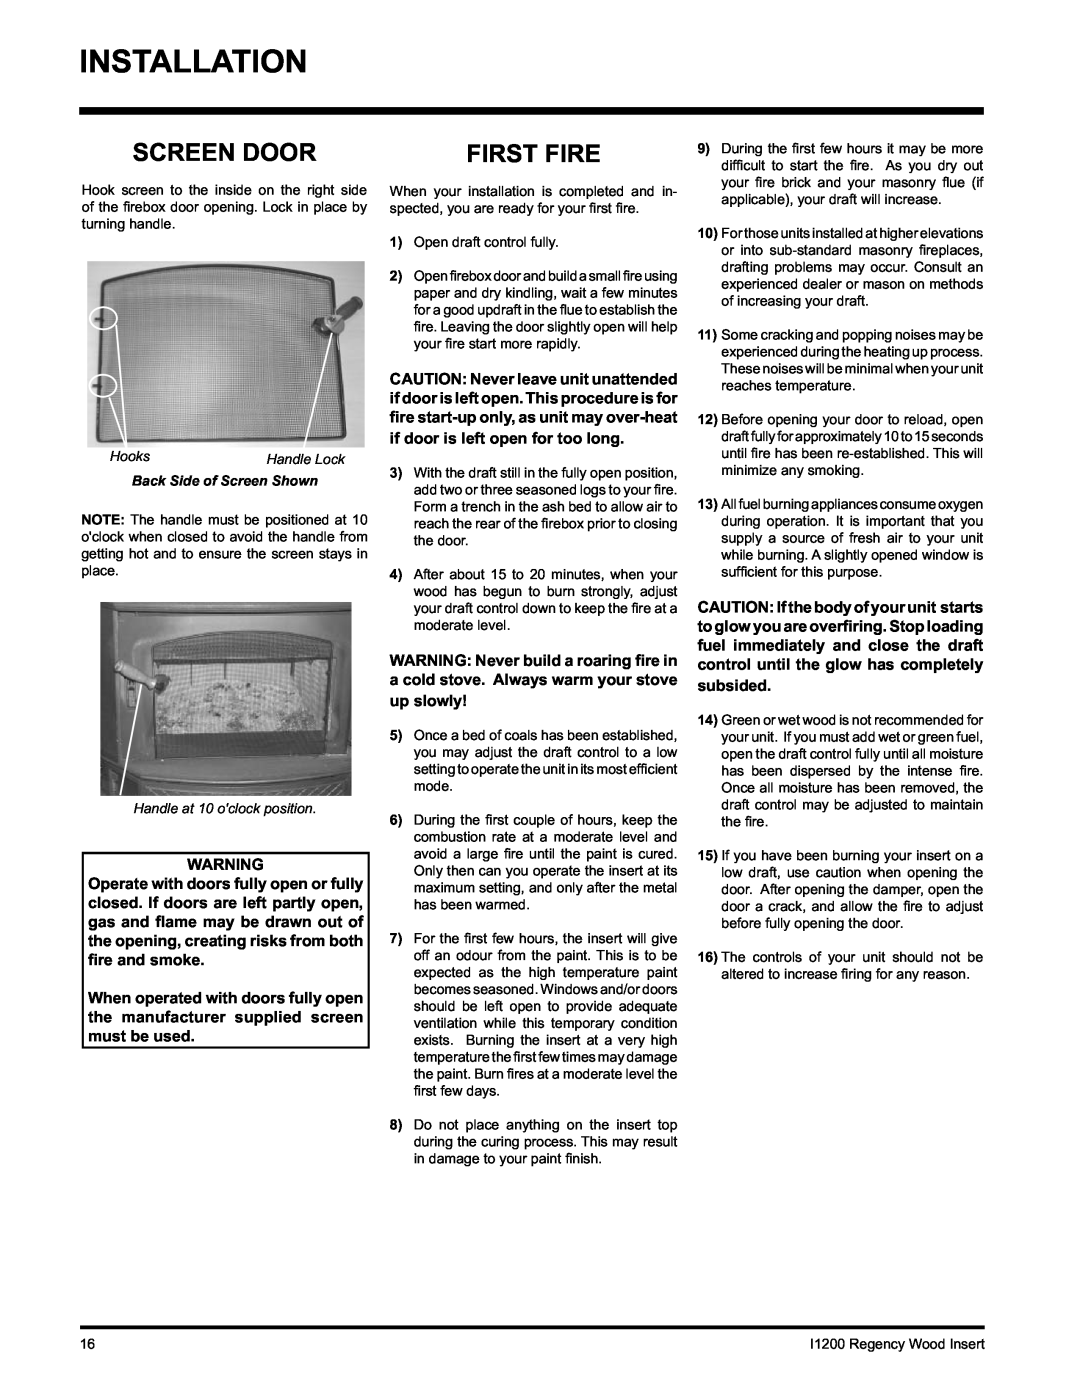 Regency I1200S installation manual Installation, Screen Door, First Fire, Back Side of Screen Shown 